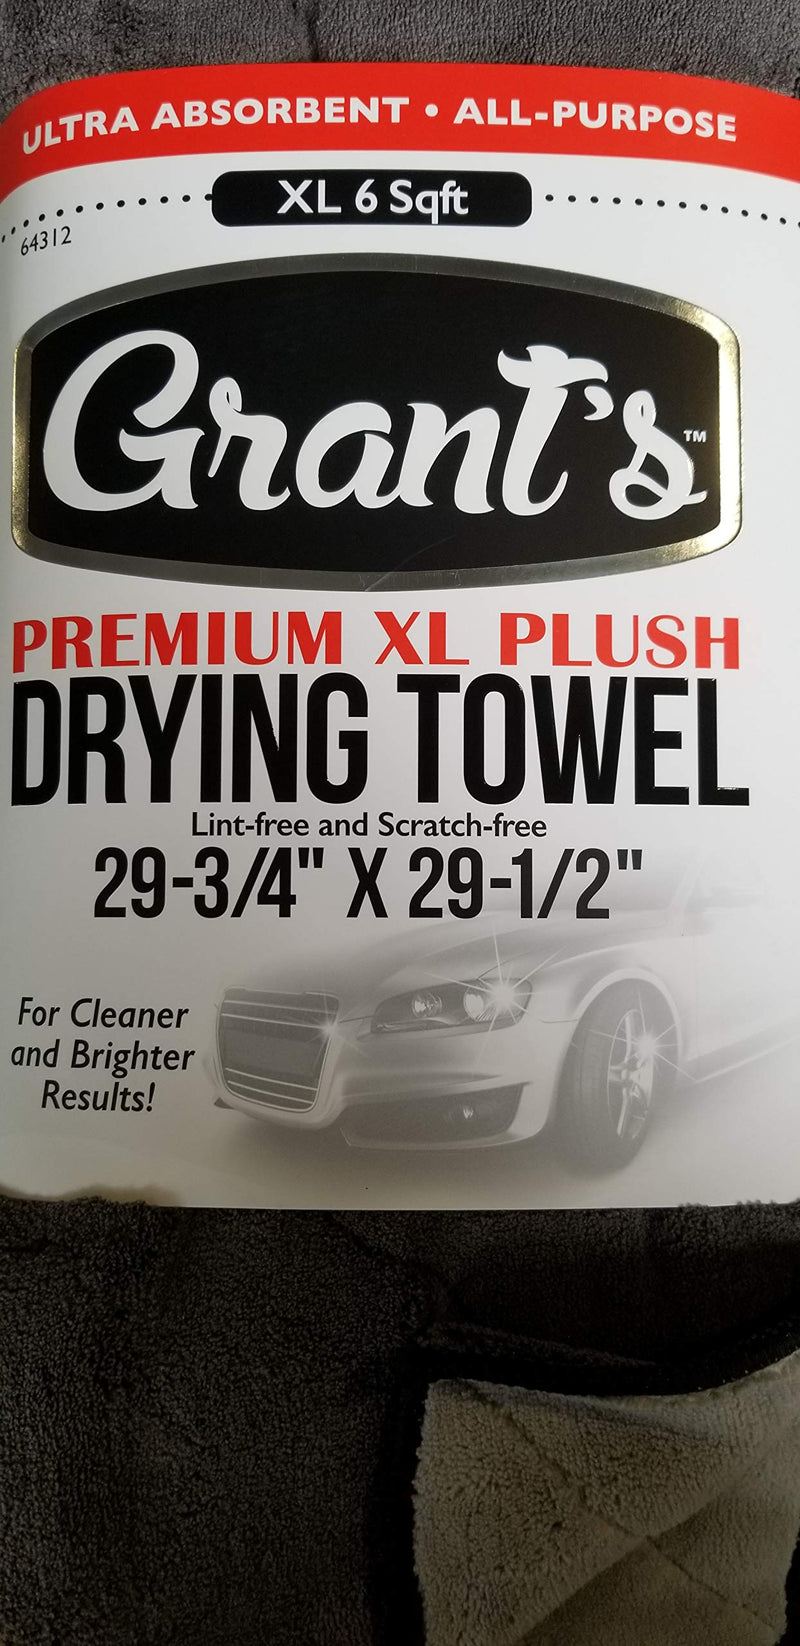  [AUSTRALIA] - Grant's Premium XL Plush Drying Towel (6 Square Feet) 29-3/4" x 29-1/2" - Ultra Absorbent All-Purpose Lint-Free Scratch-Free Microfiber